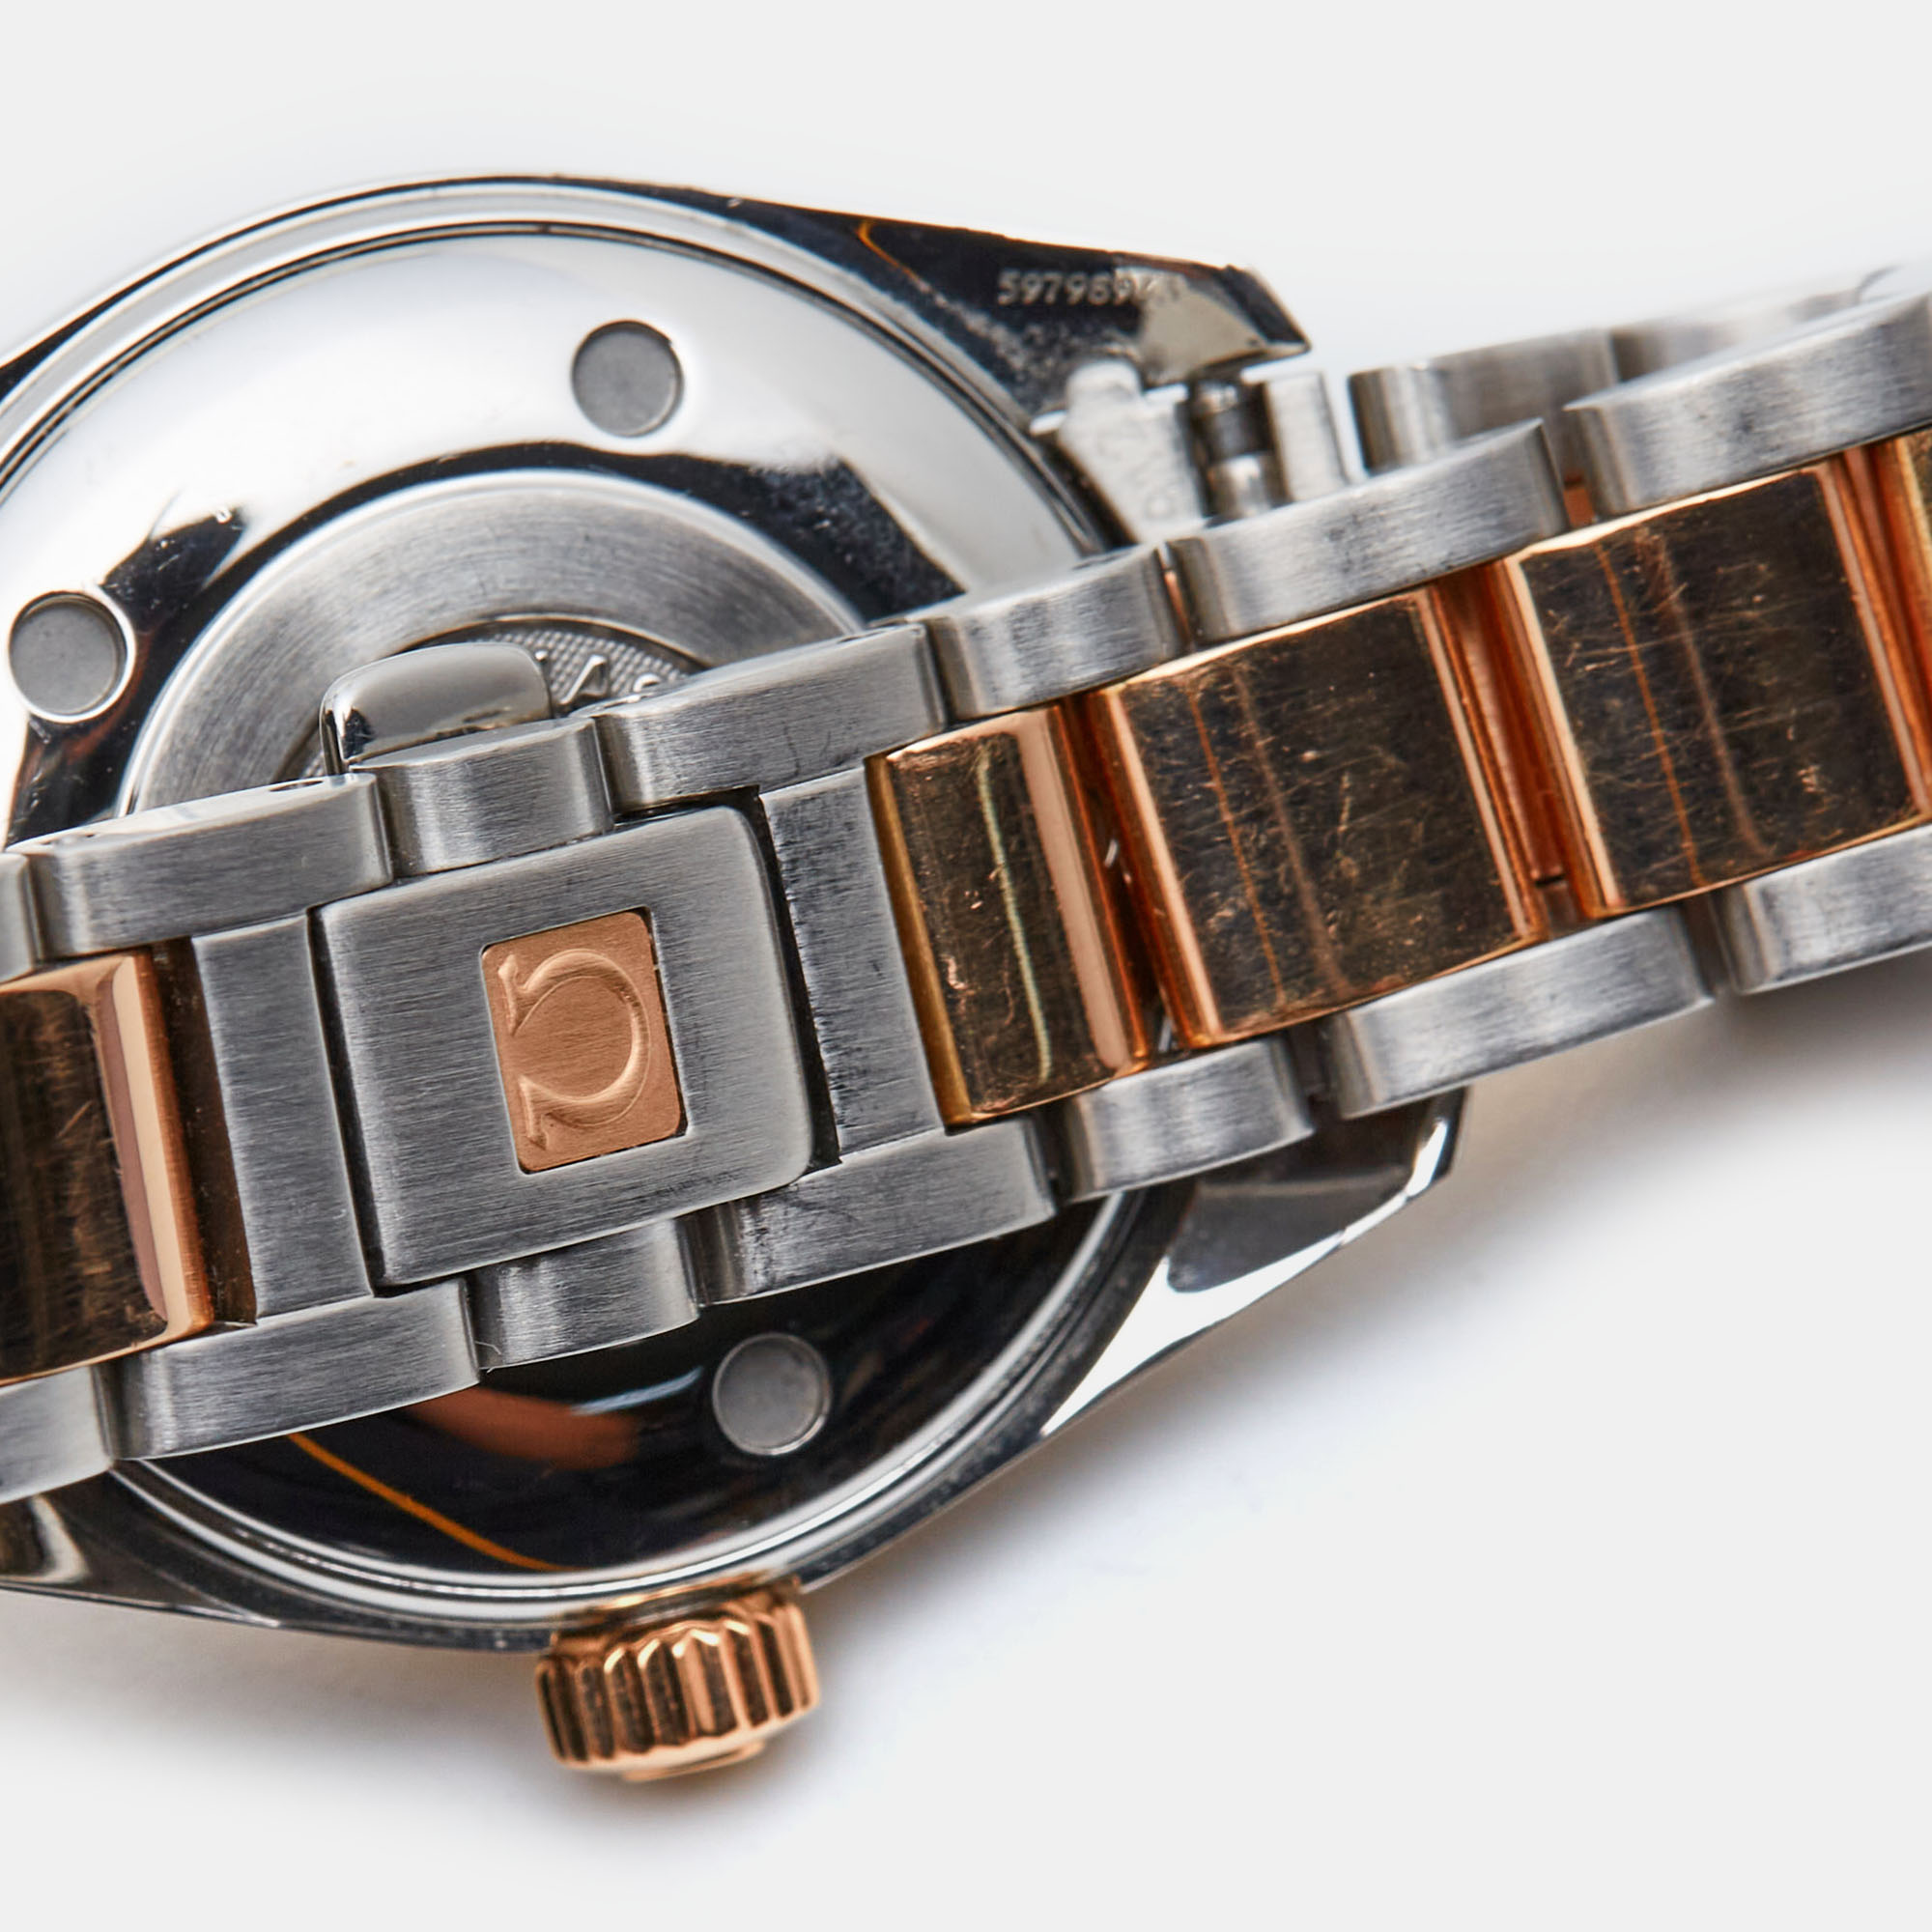 Omega Mother Of Pearl Diamond 18K Rose Gold Stainless Steel Seamaster Aqua Terra 2365.75.00 Women's Wristwatch 29.20 Mm